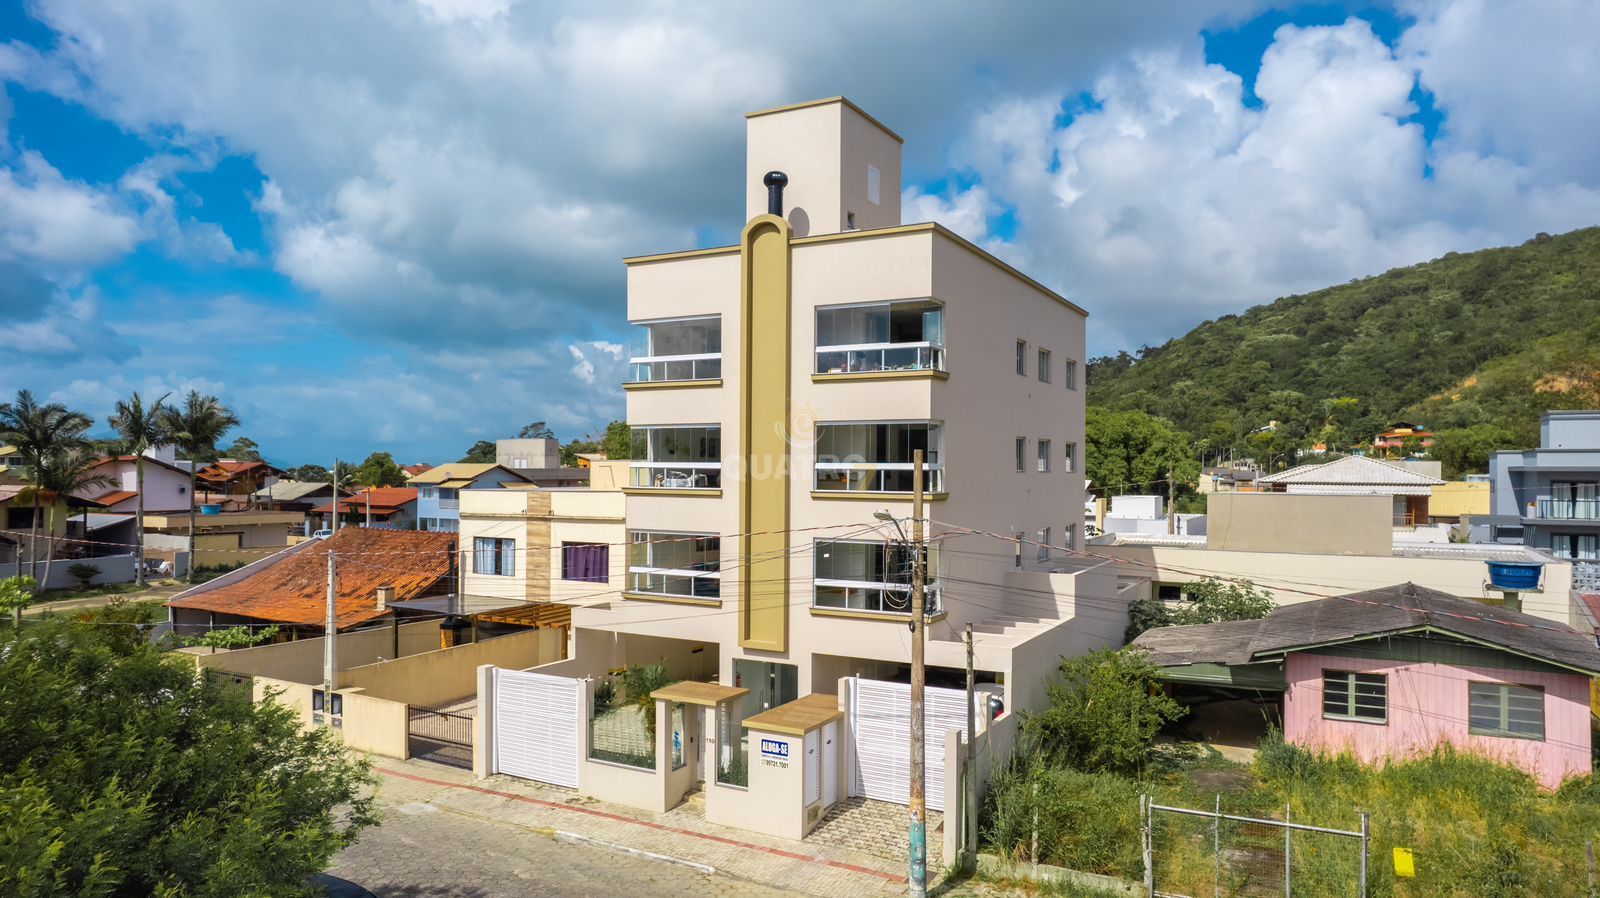 Prdio comercial/residencial  venda  no Zimbros - Bombinhas, SC. Imveis